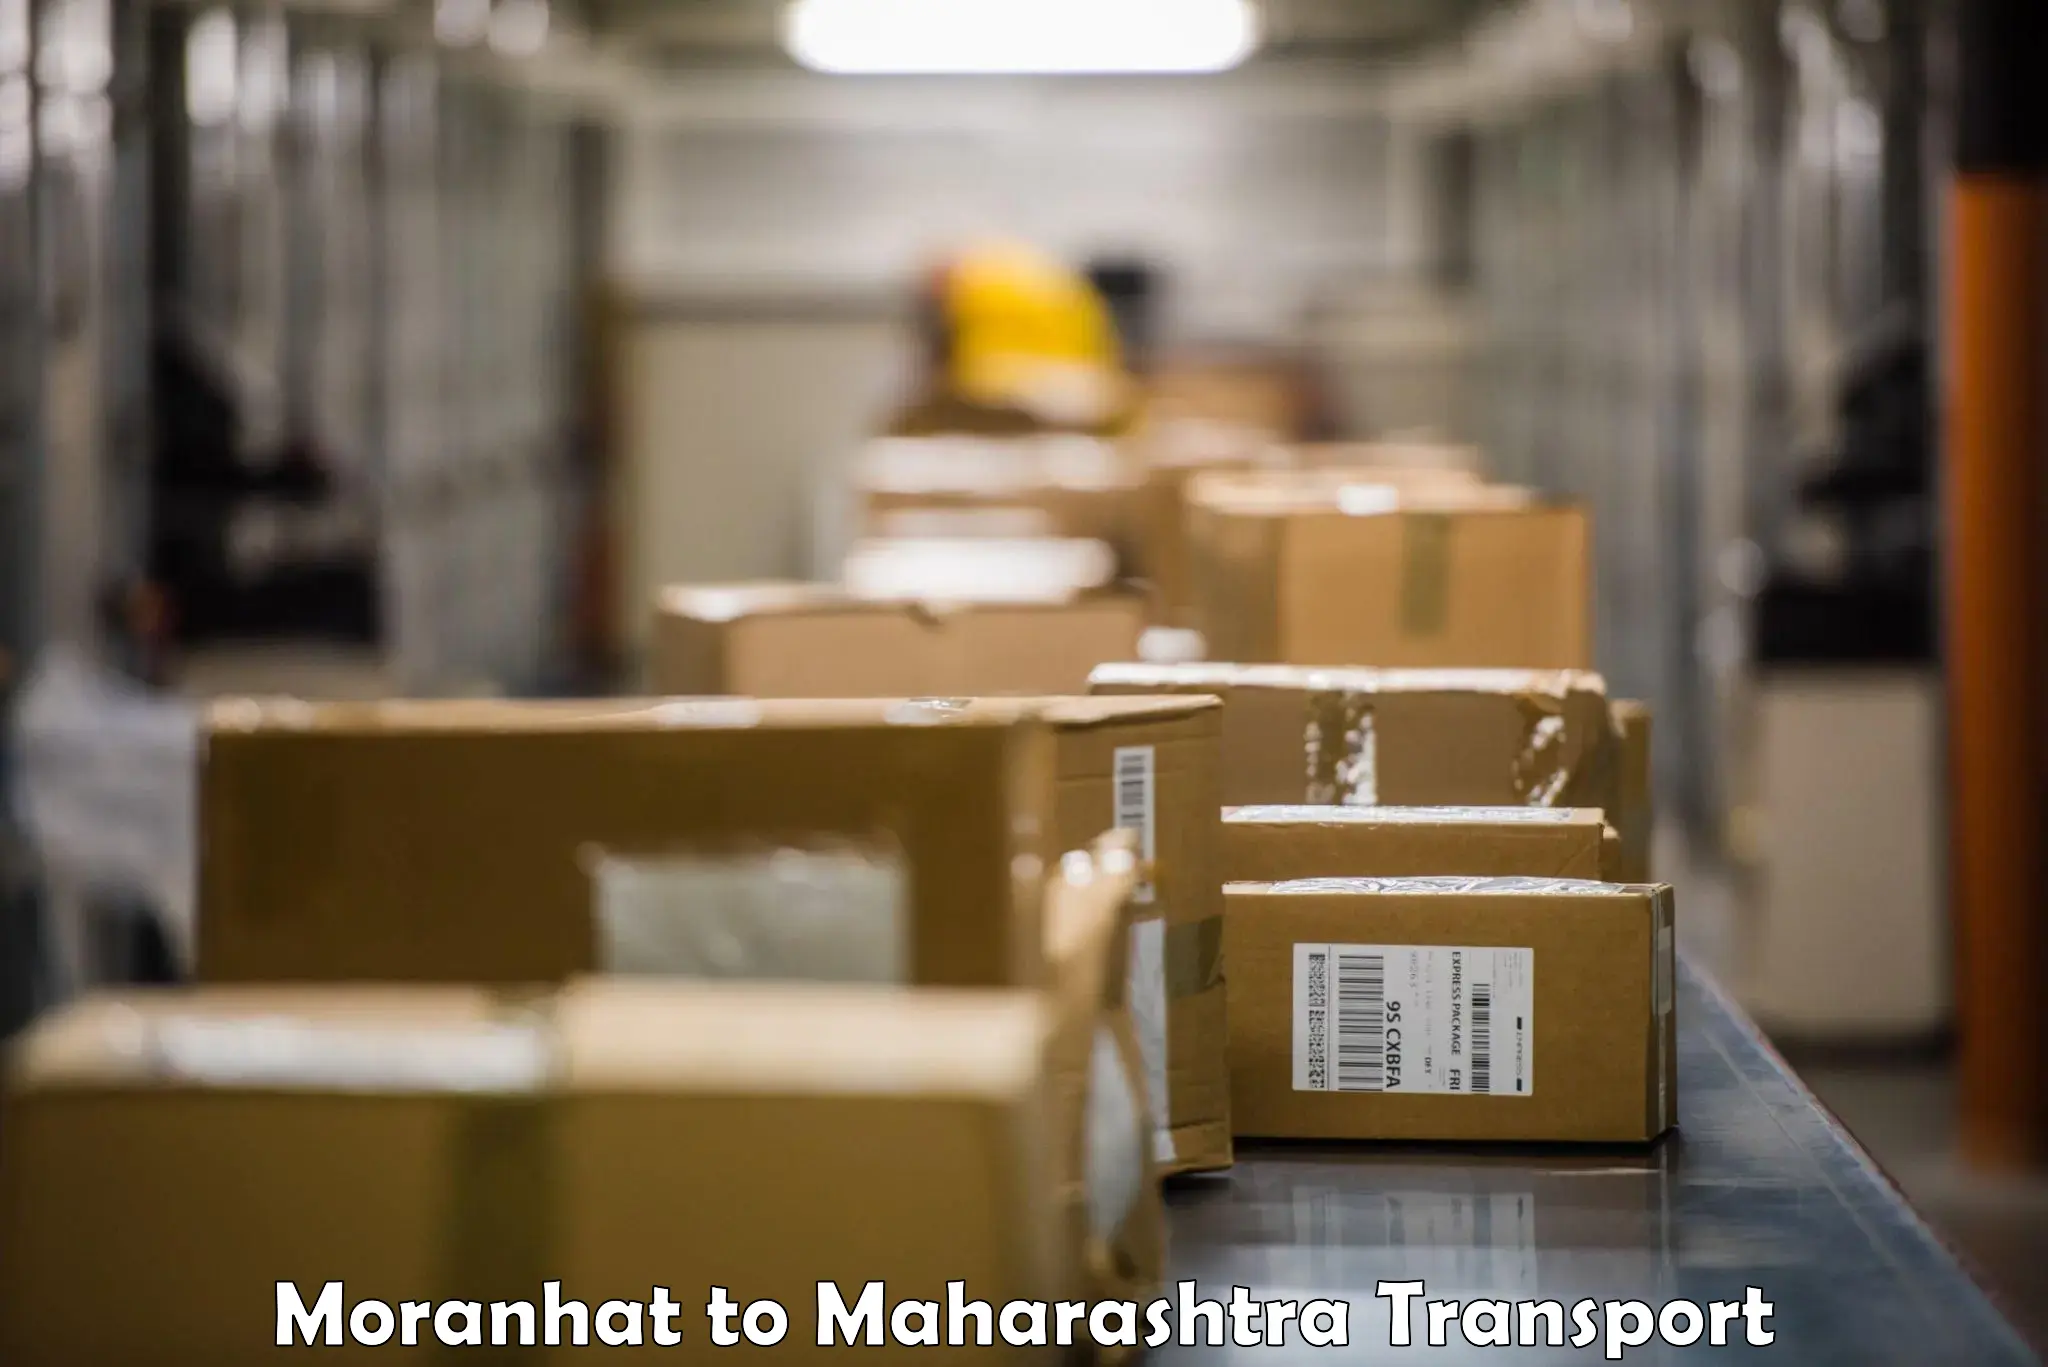 Sending bike to another city Moranhat to Mumbai